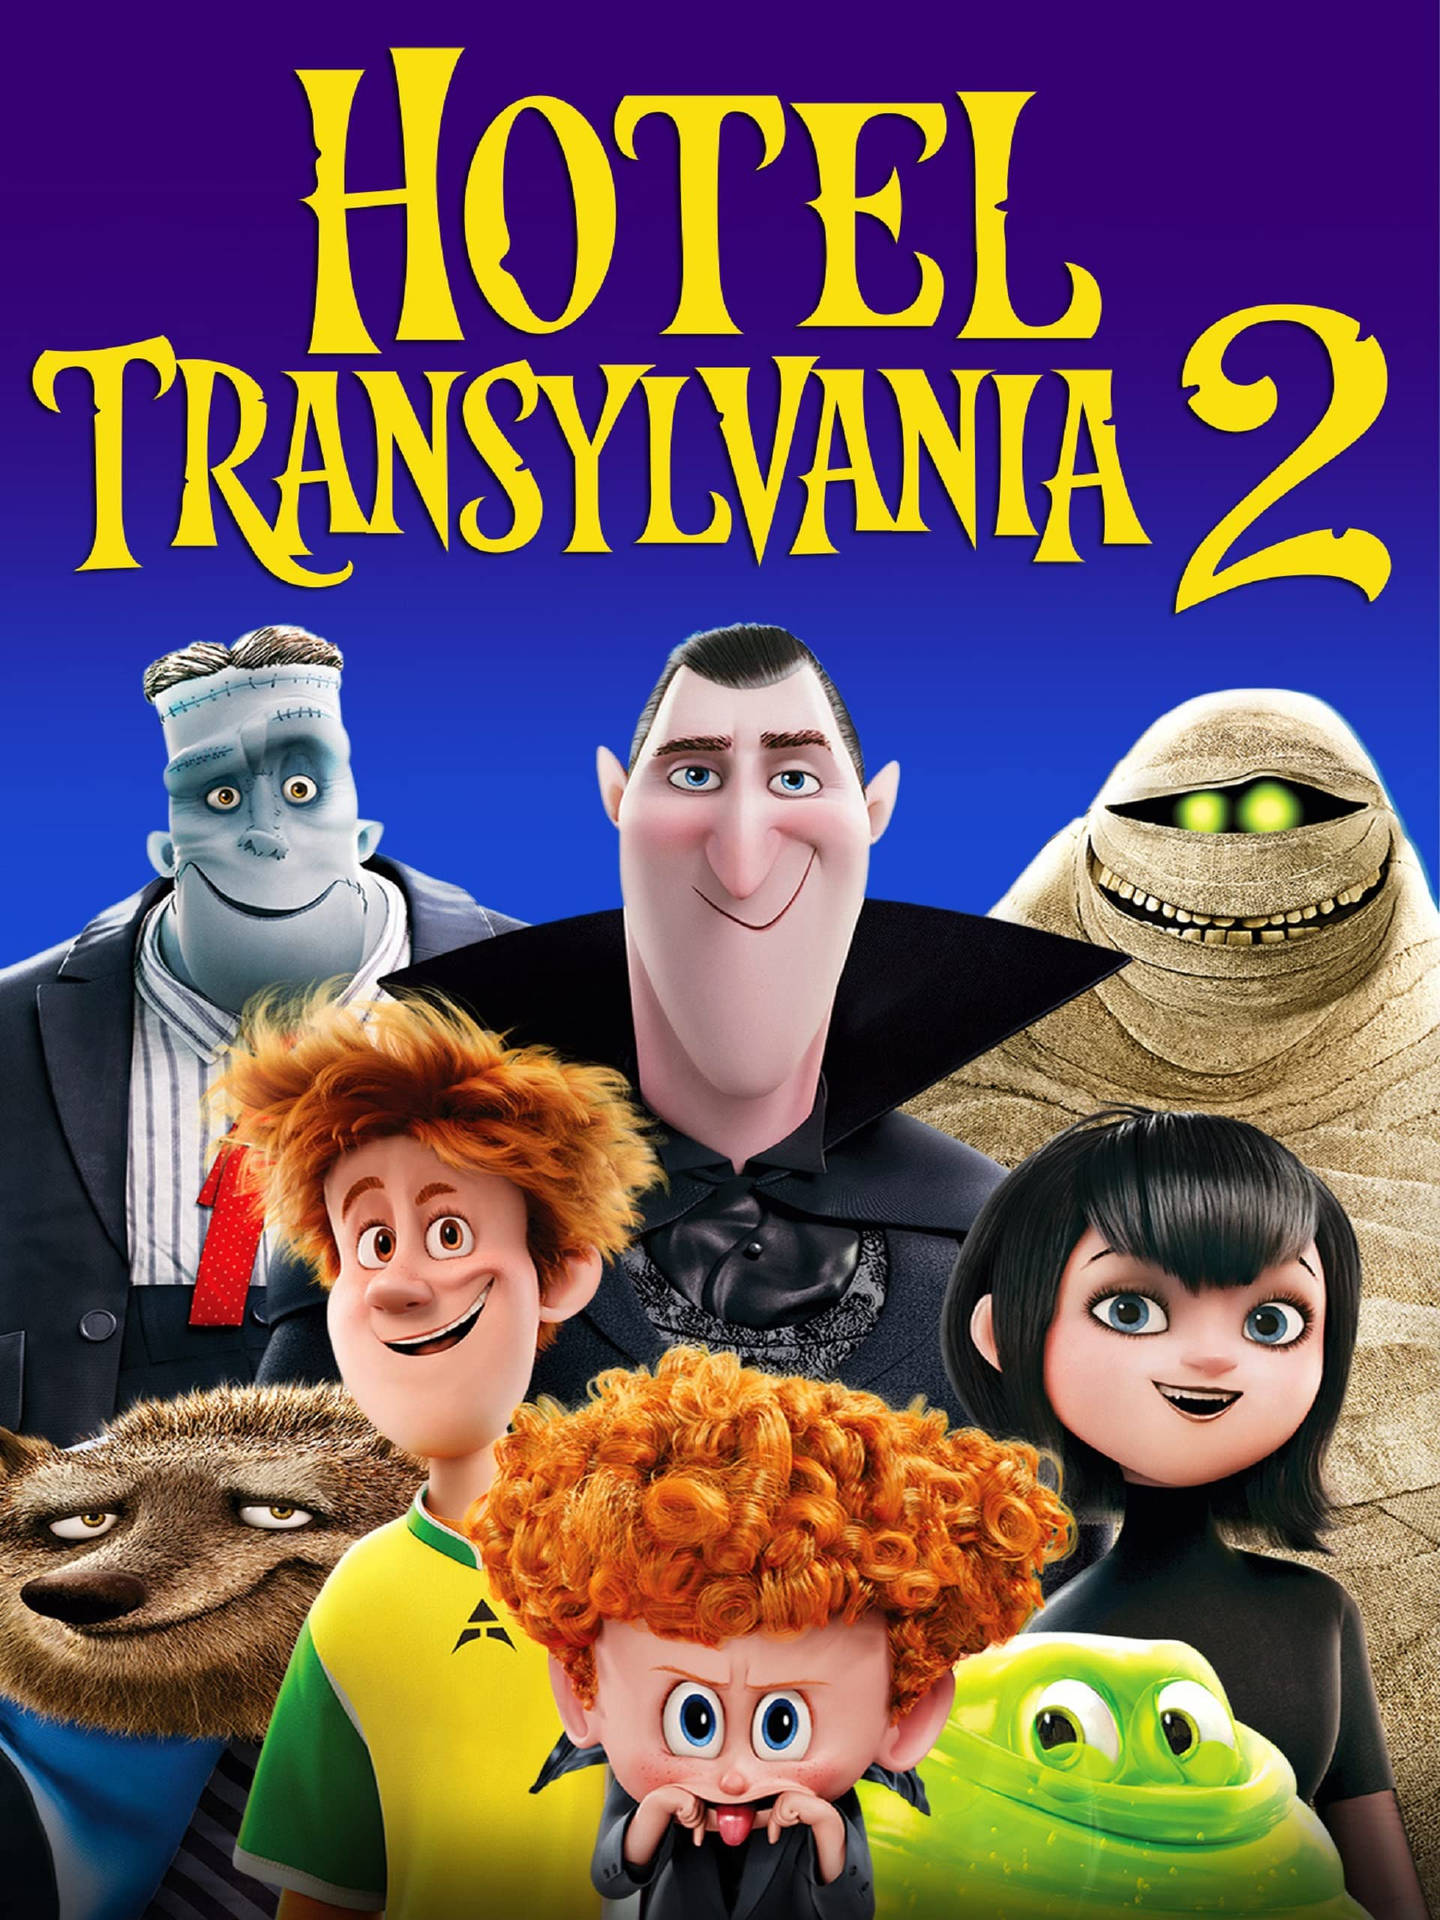 Hotel Transylvania 2 Movie Poster Wallpaper